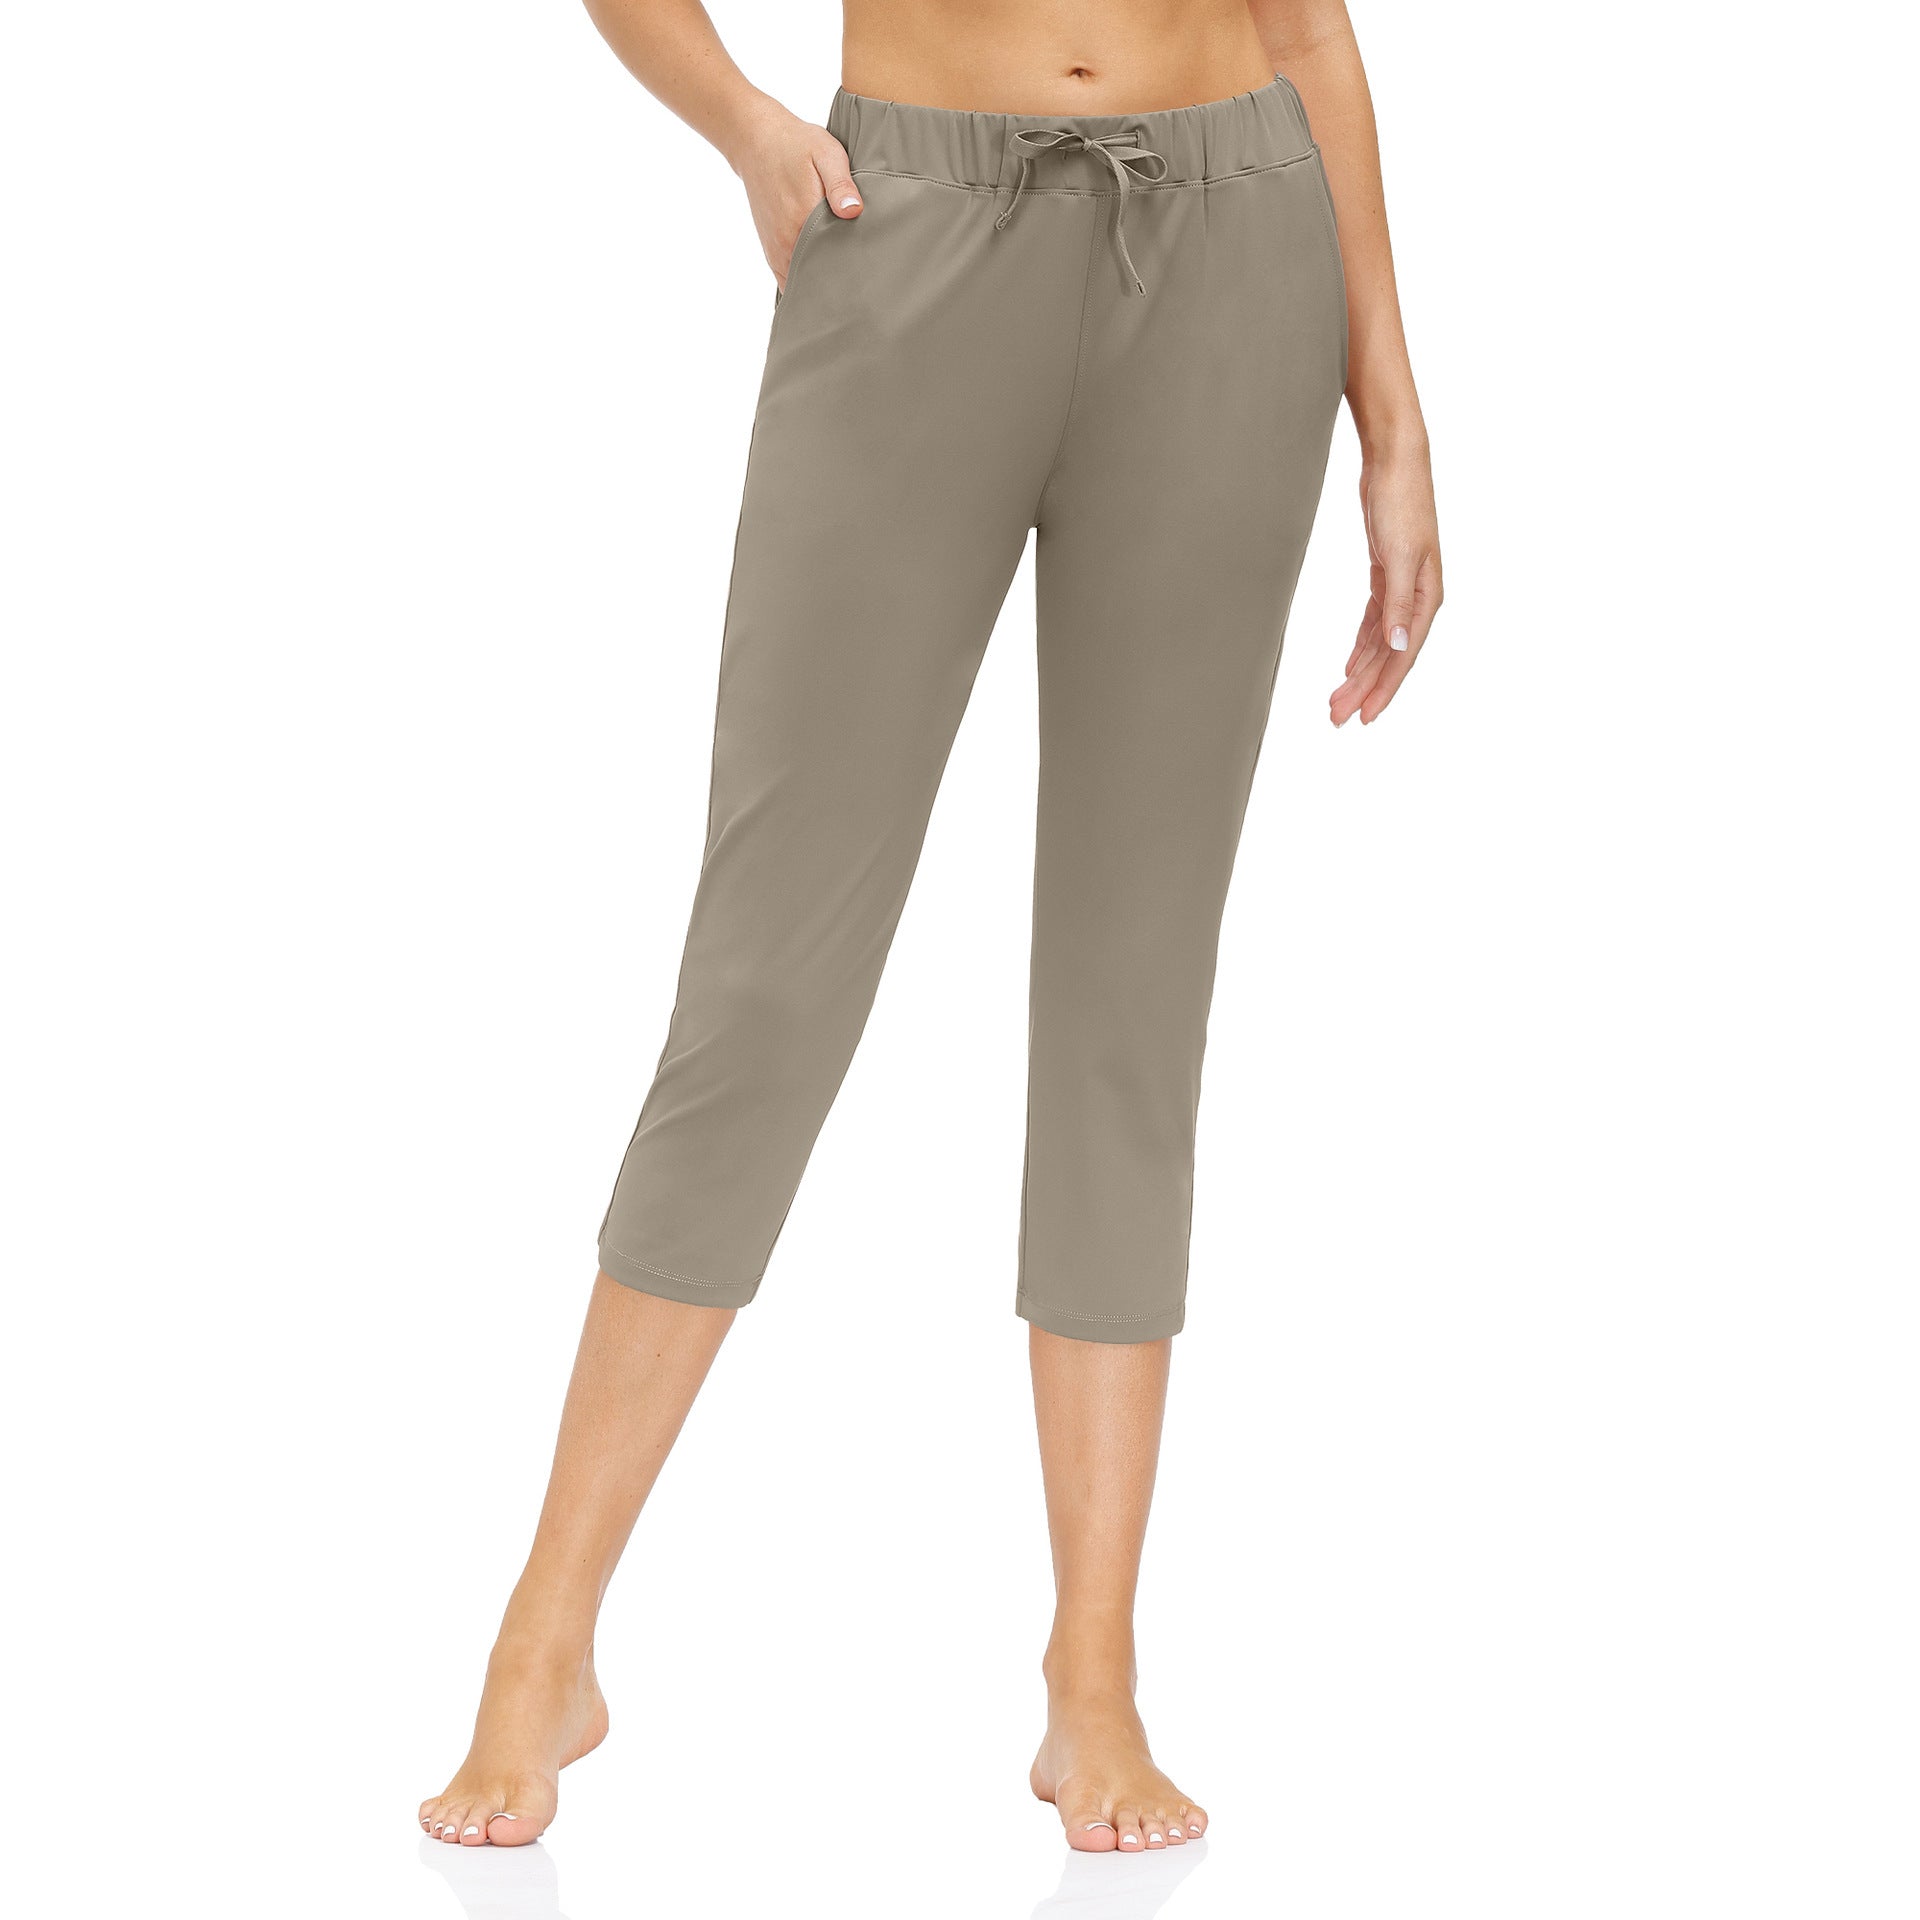 Women Casual Low Waist Cropped Pants 3/4 Leggings with Pockets YJ20W-K115